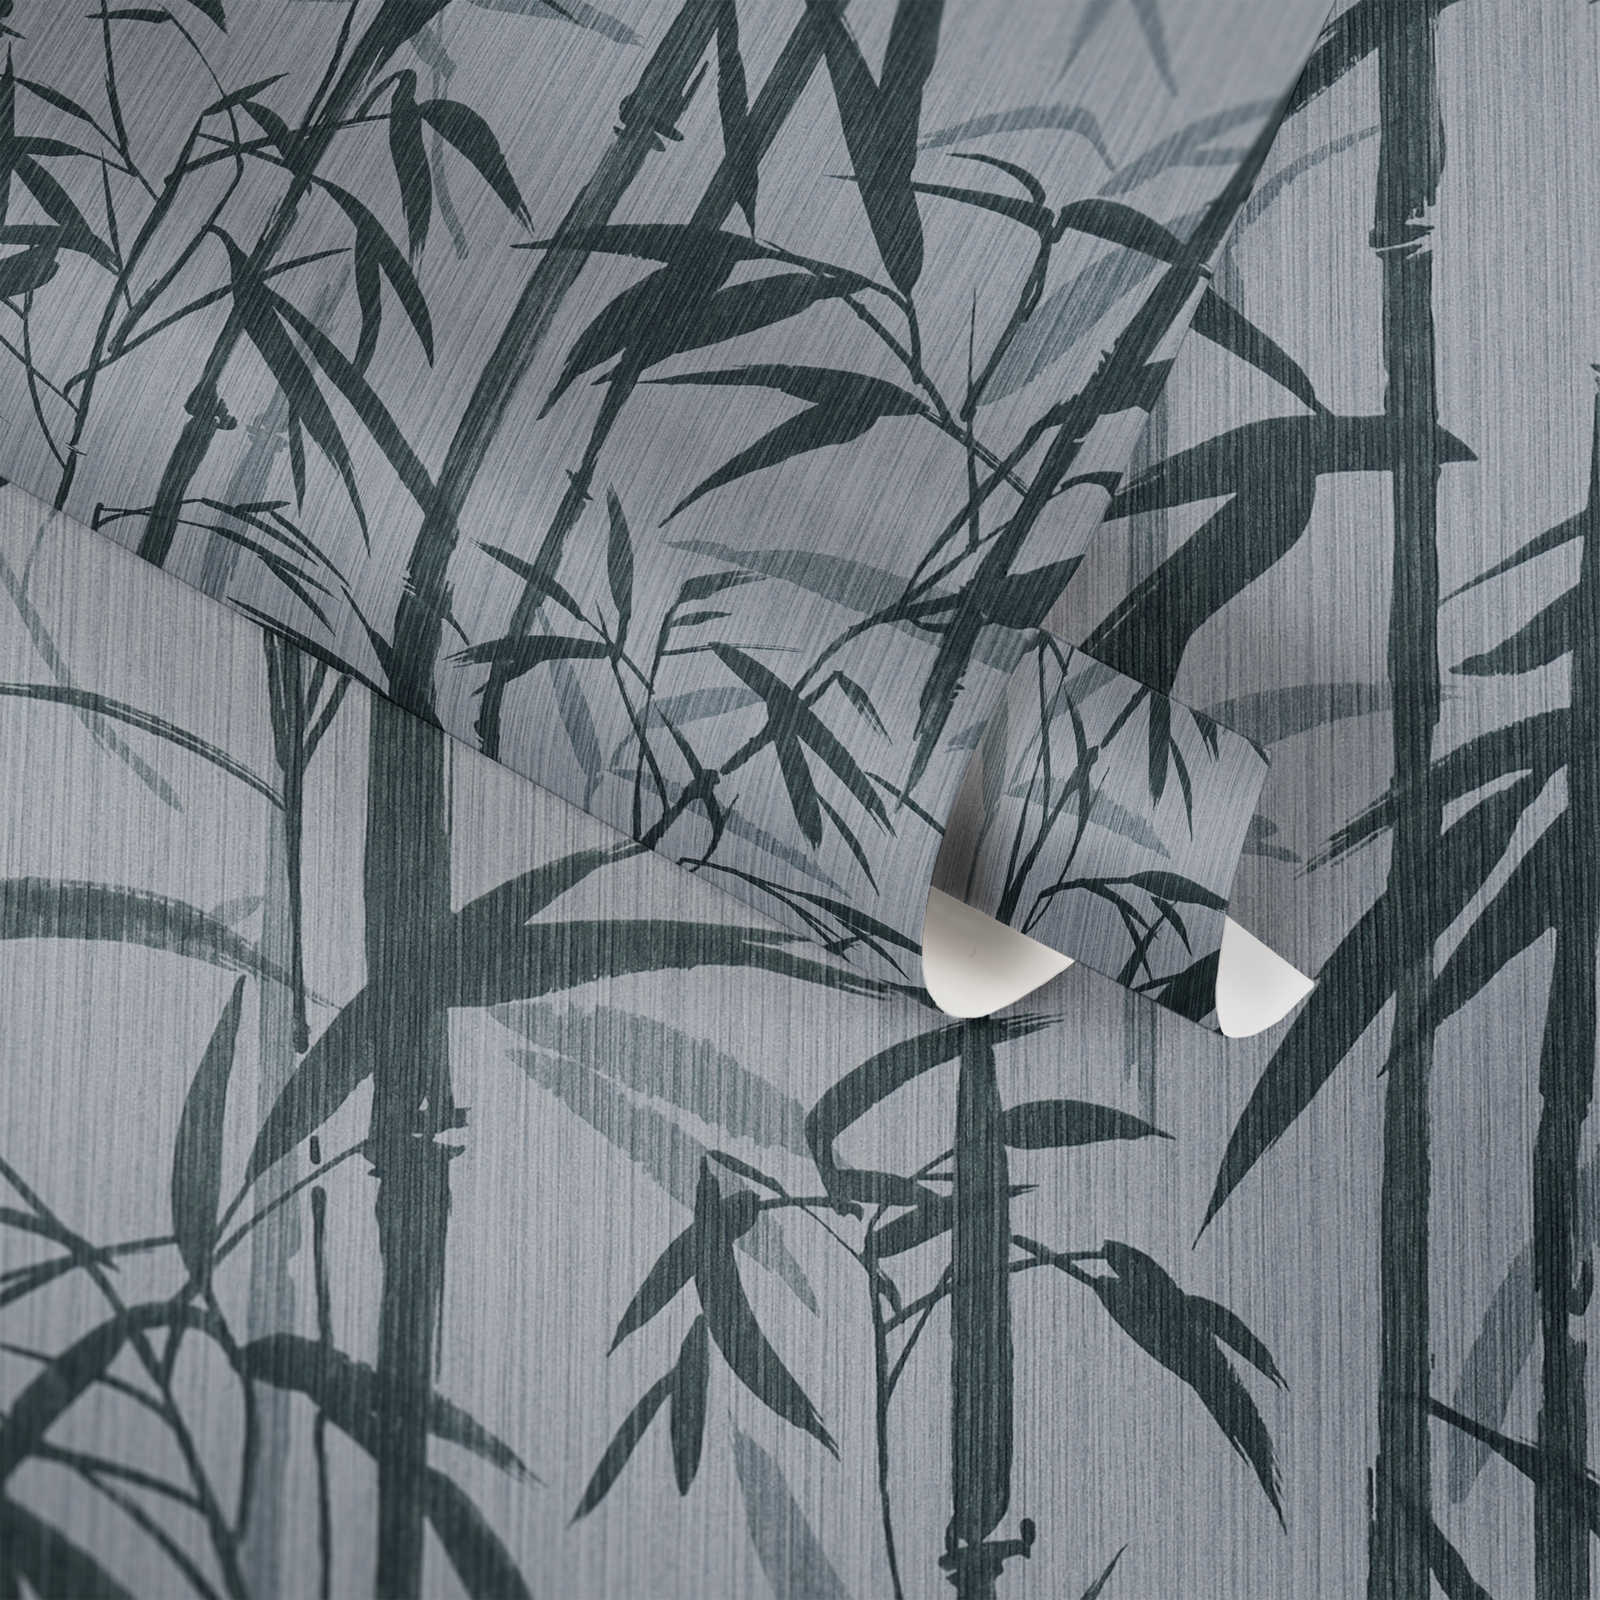             Papel pintado no tejido MICHALSKY con motivo de bambú natural - gris, negro
        